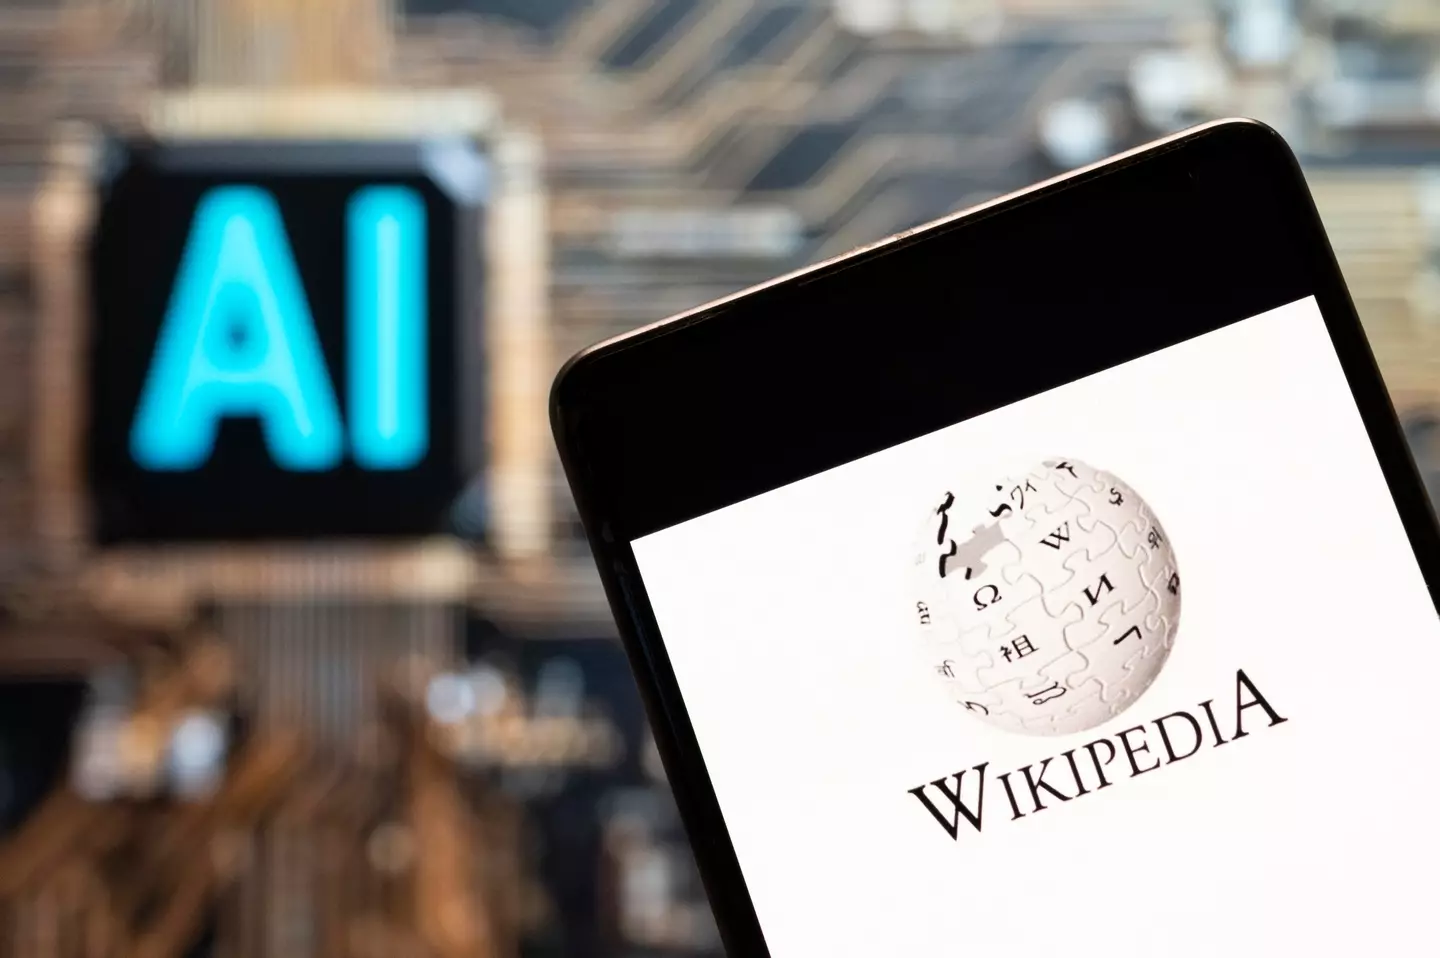 Billions of people each year use Wikipedia.